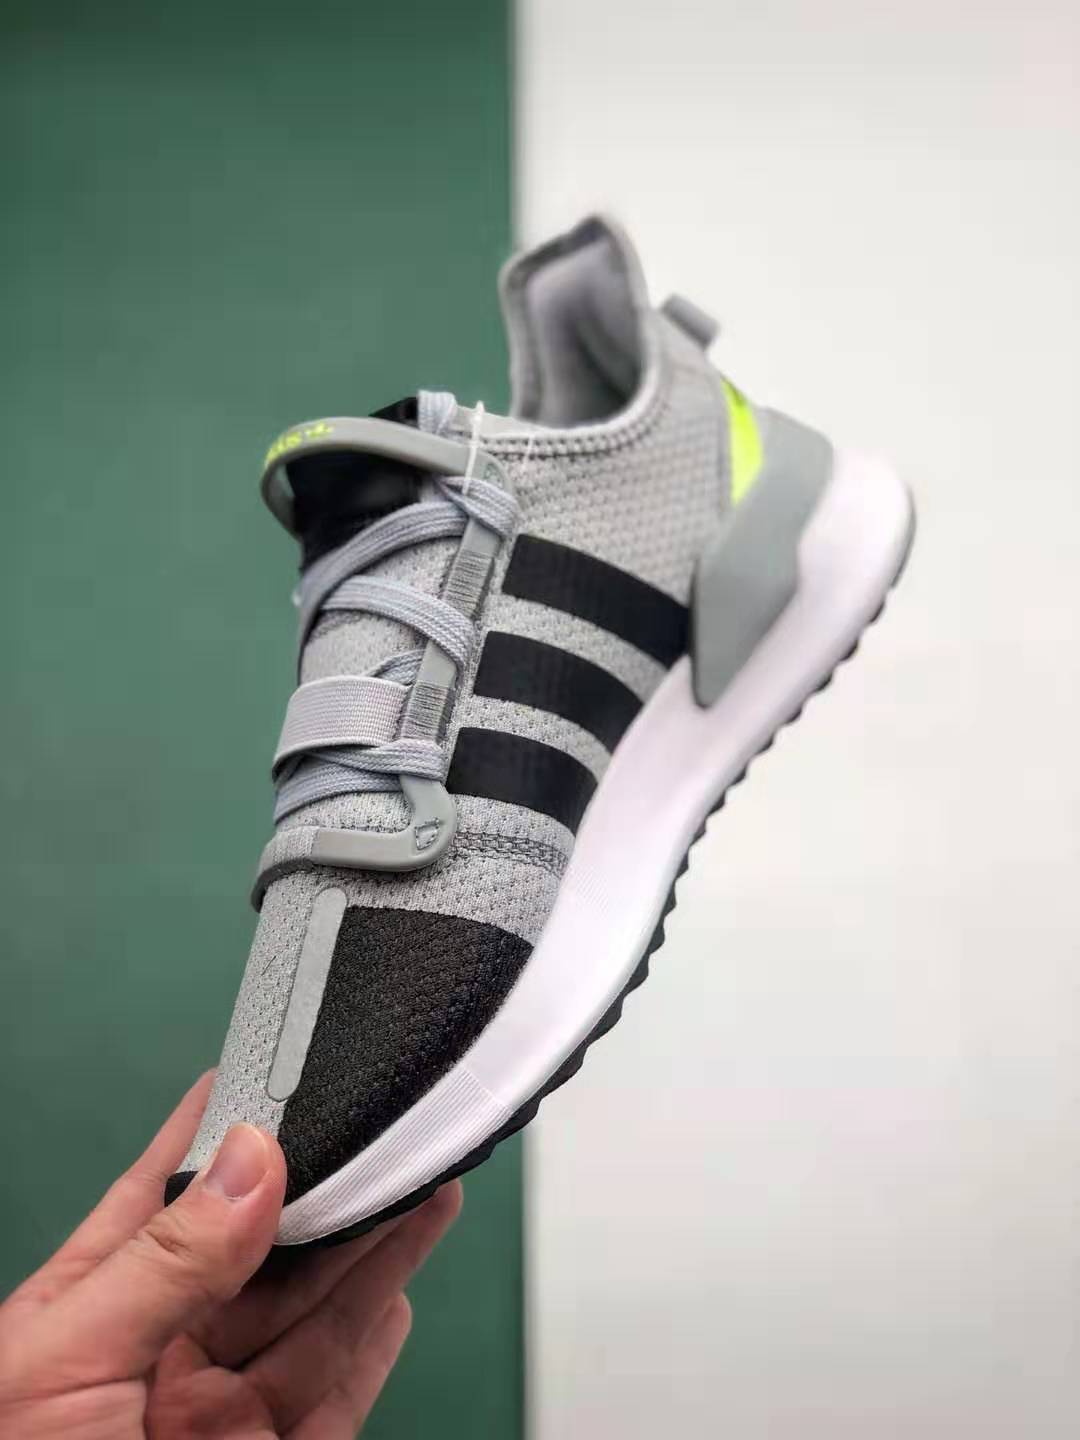 Adidas U_Path Run Shoes EE4471 - Stylish and Versatile Footwear for Men